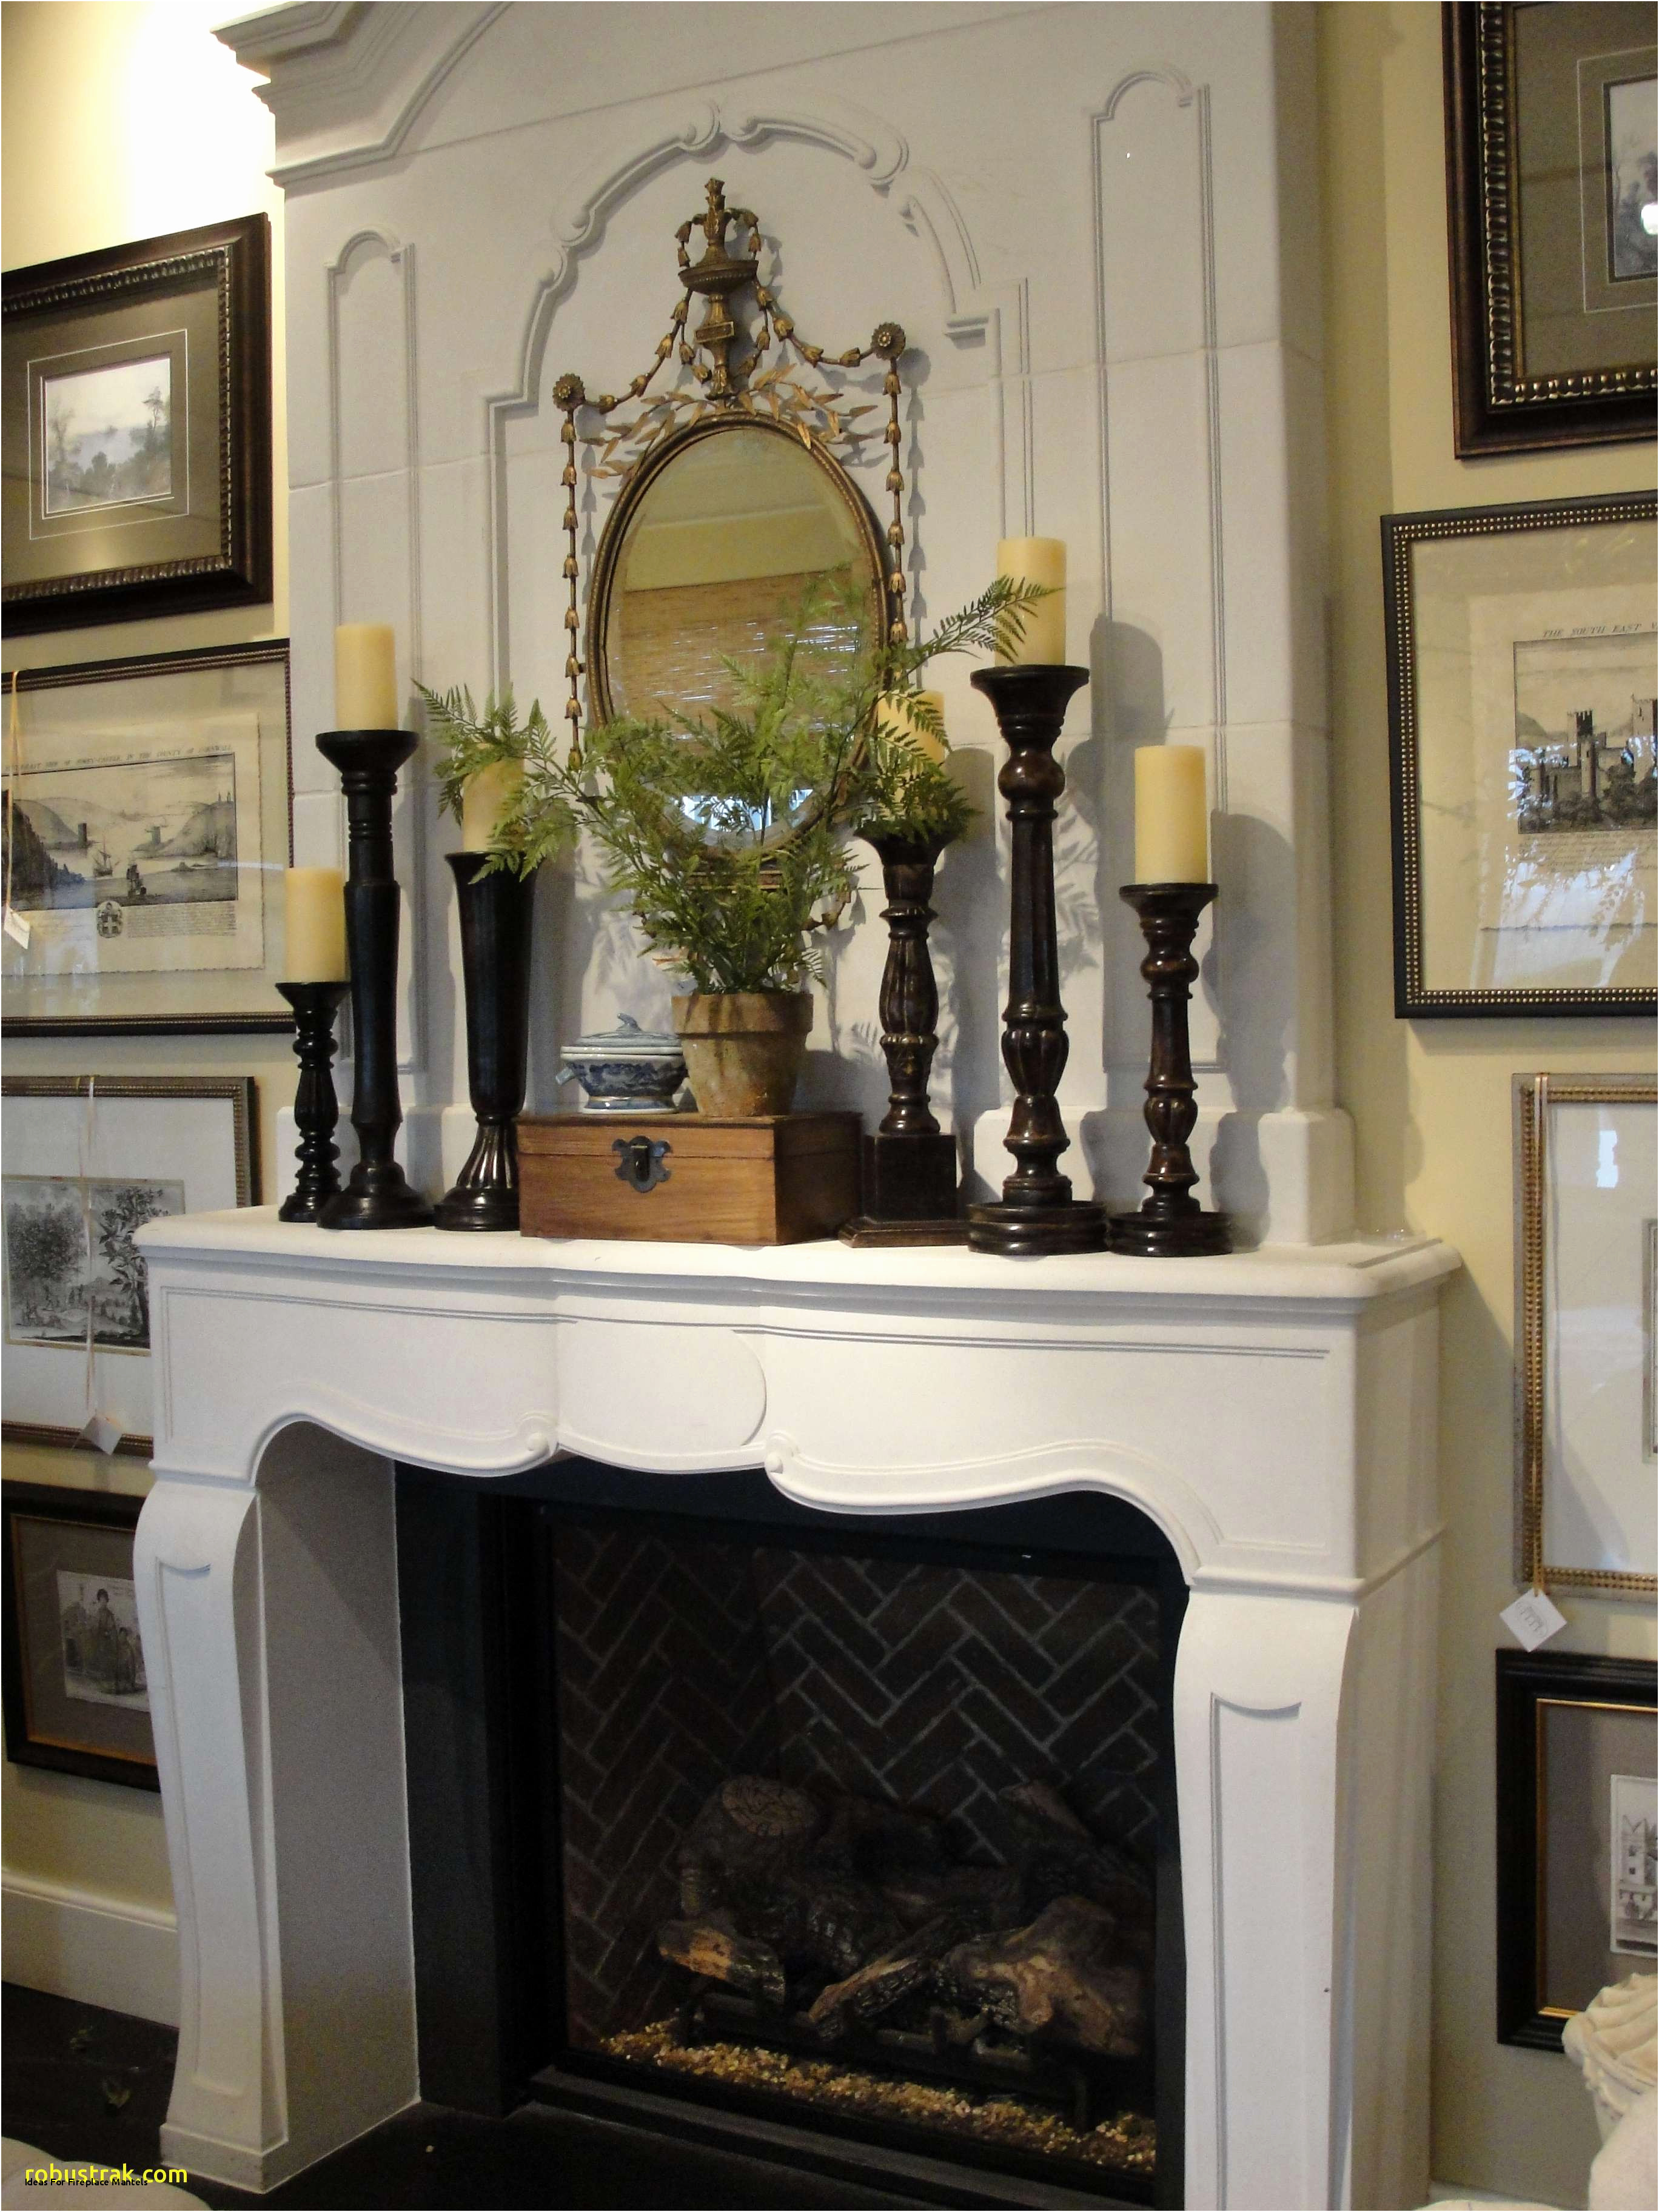 Elegant Mantel Ideas for Fireplace